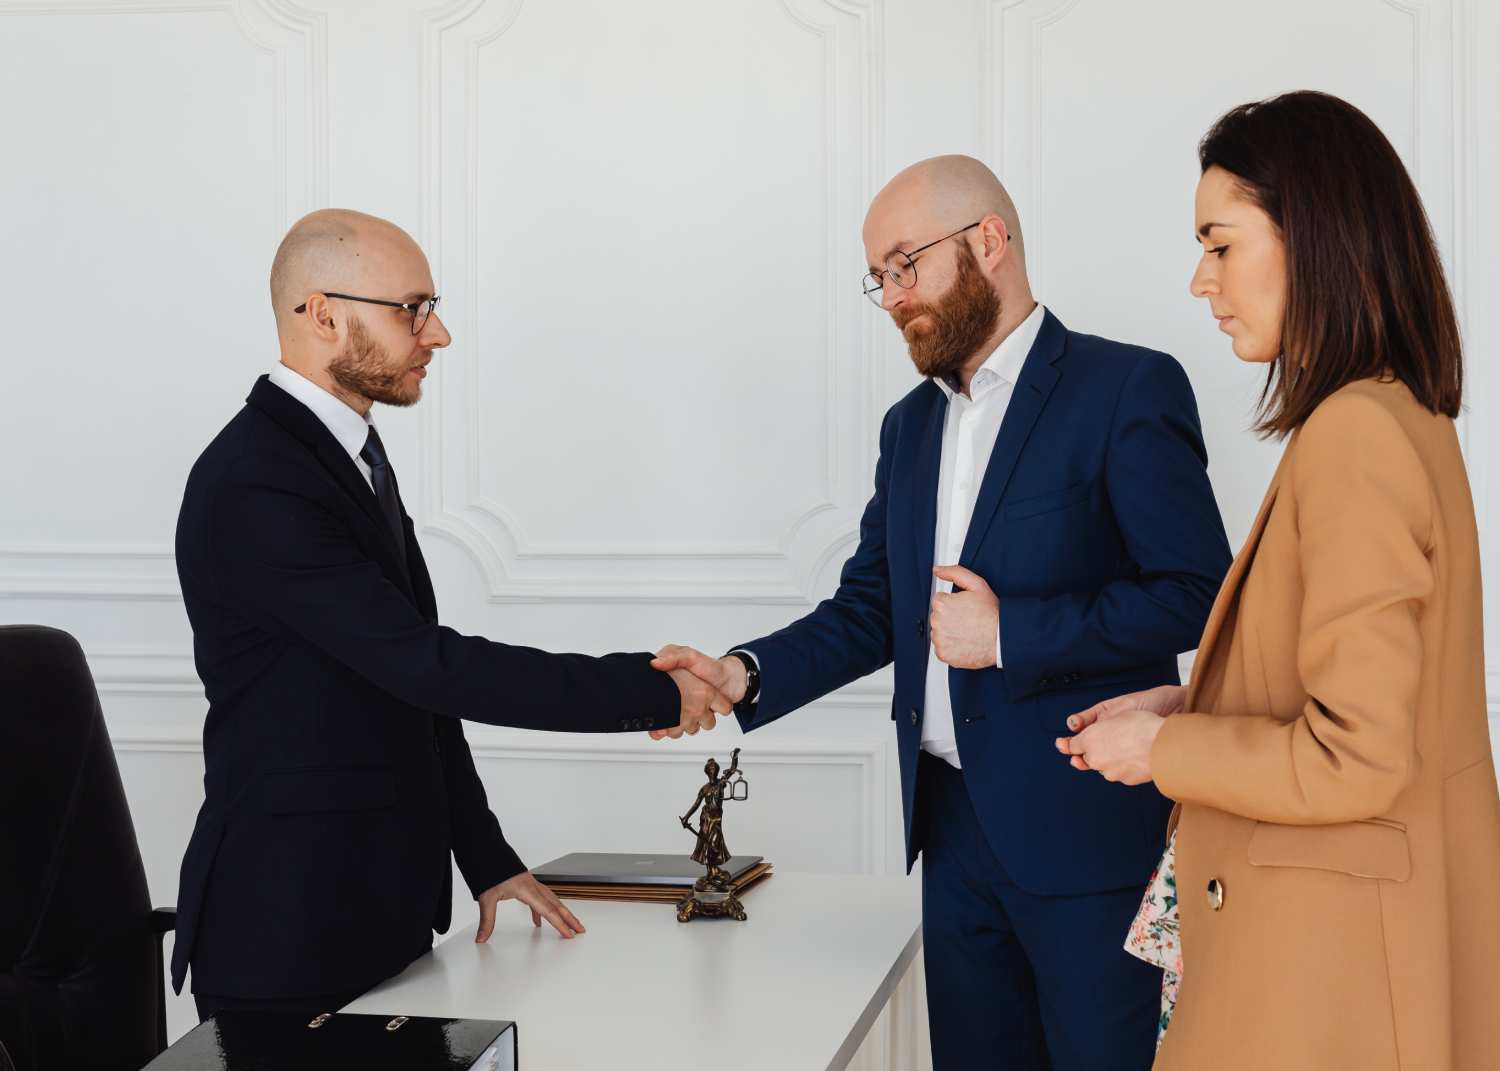 two men shaking hands over a desk